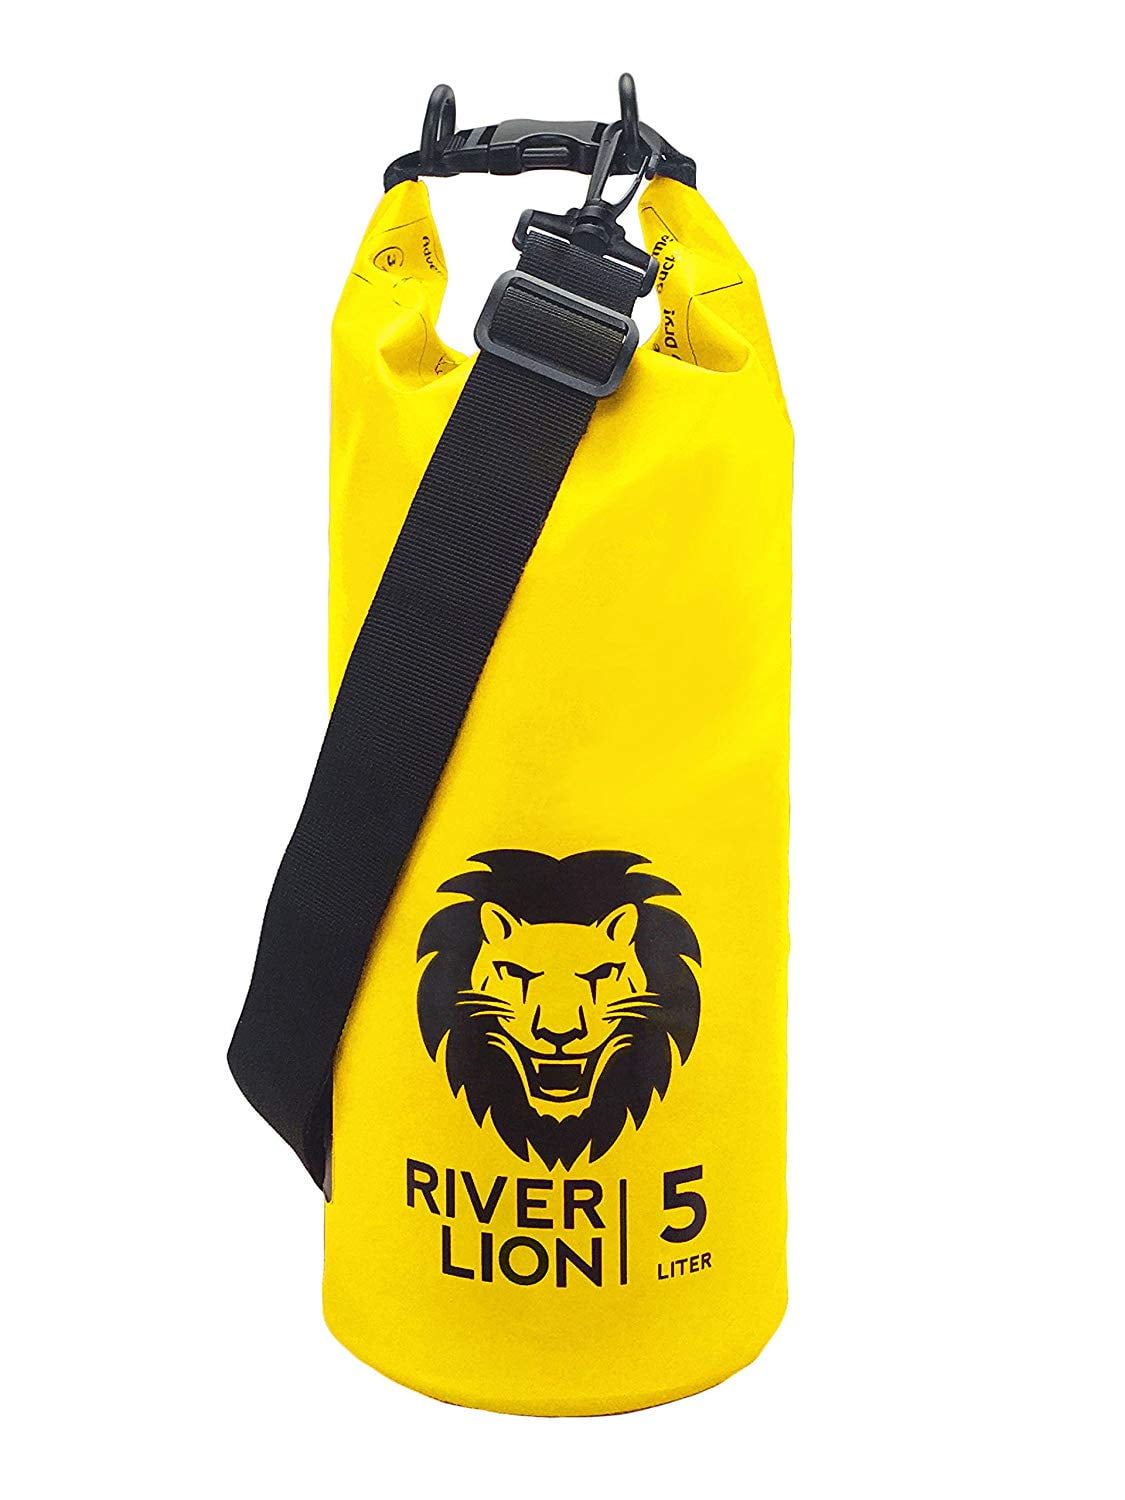 MR LION Waterproof Dry Bag Keeps Gear Dry for Water Sports with Waterproof Phone Case